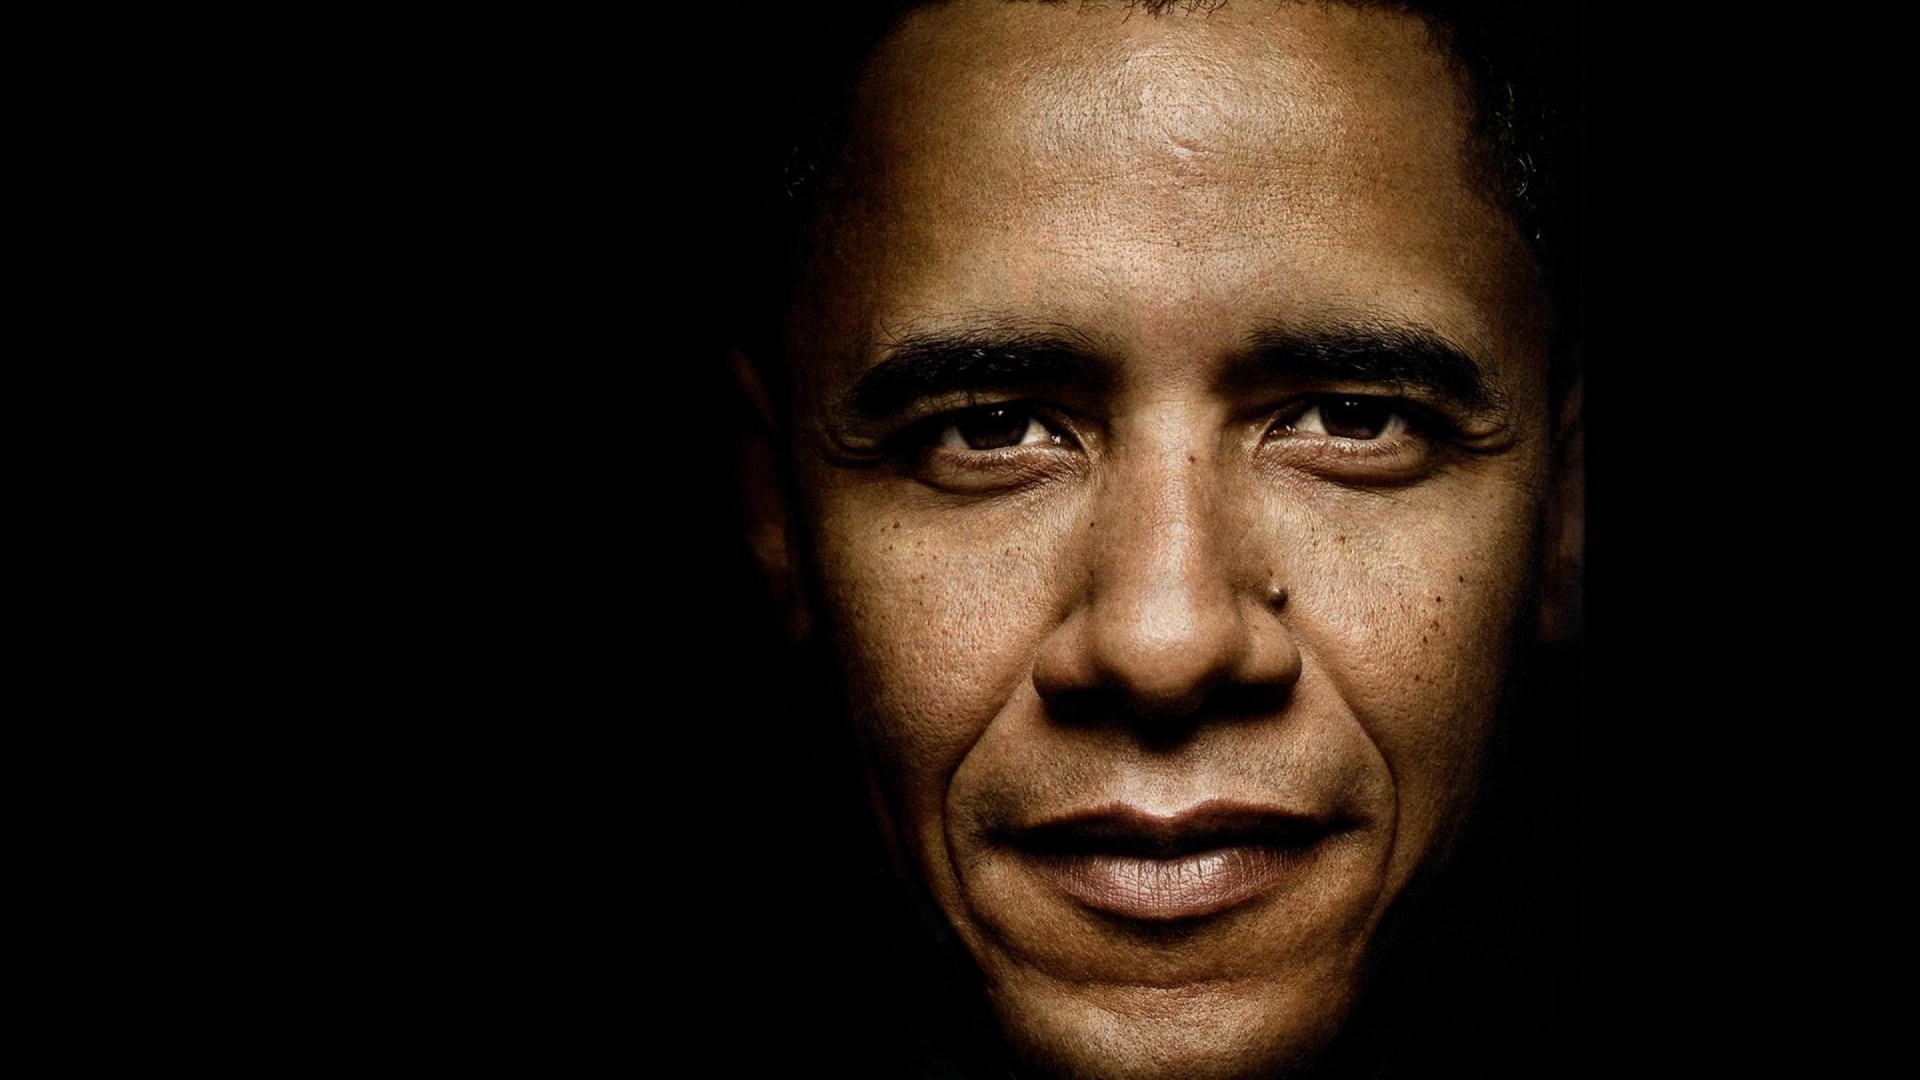 President Barack Obama Portrait Wallpaper for Desktop 1920x1080